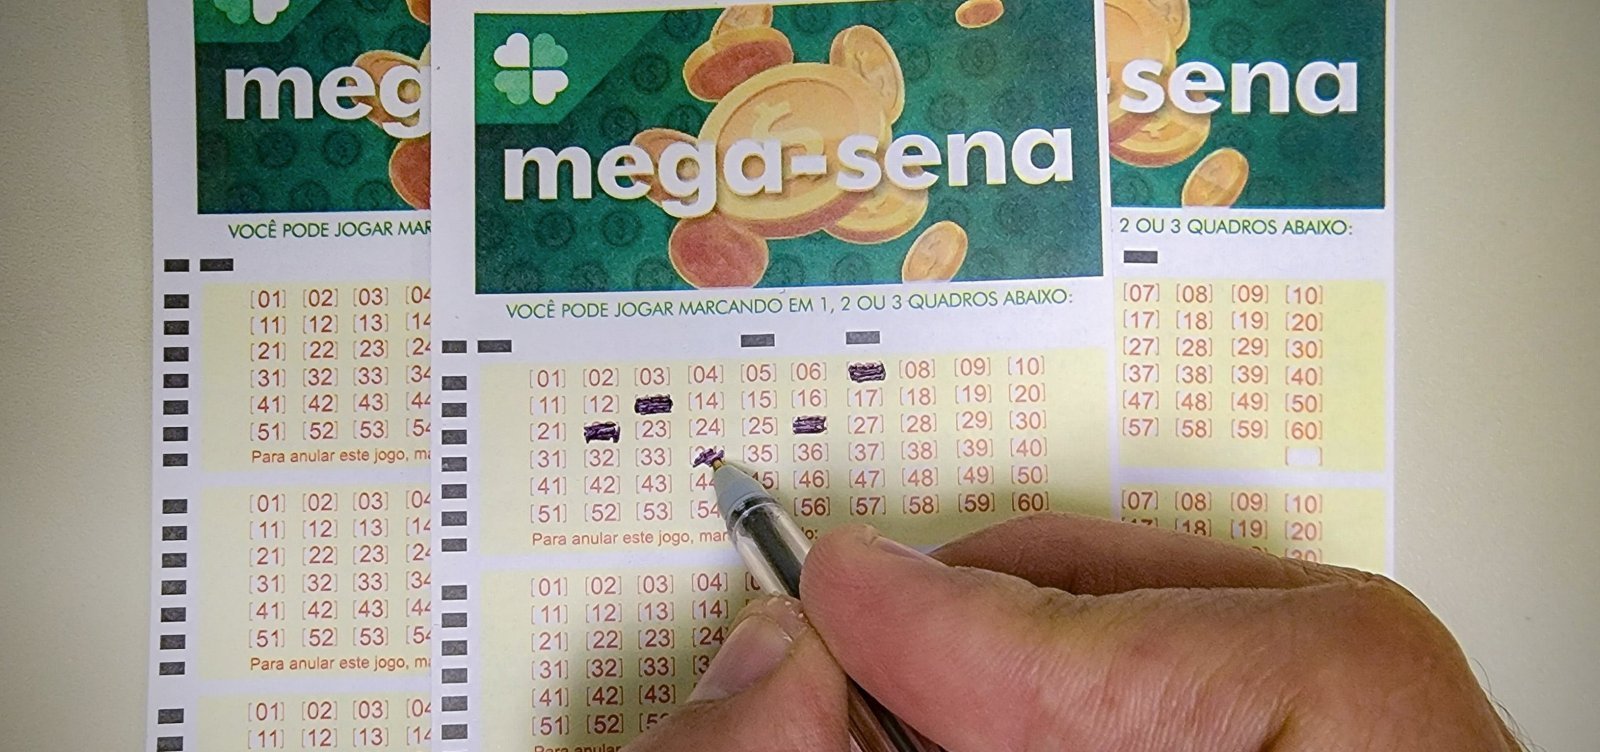 Mega-Sena vai sortear R$ 40 milhões nesta quinta-feira